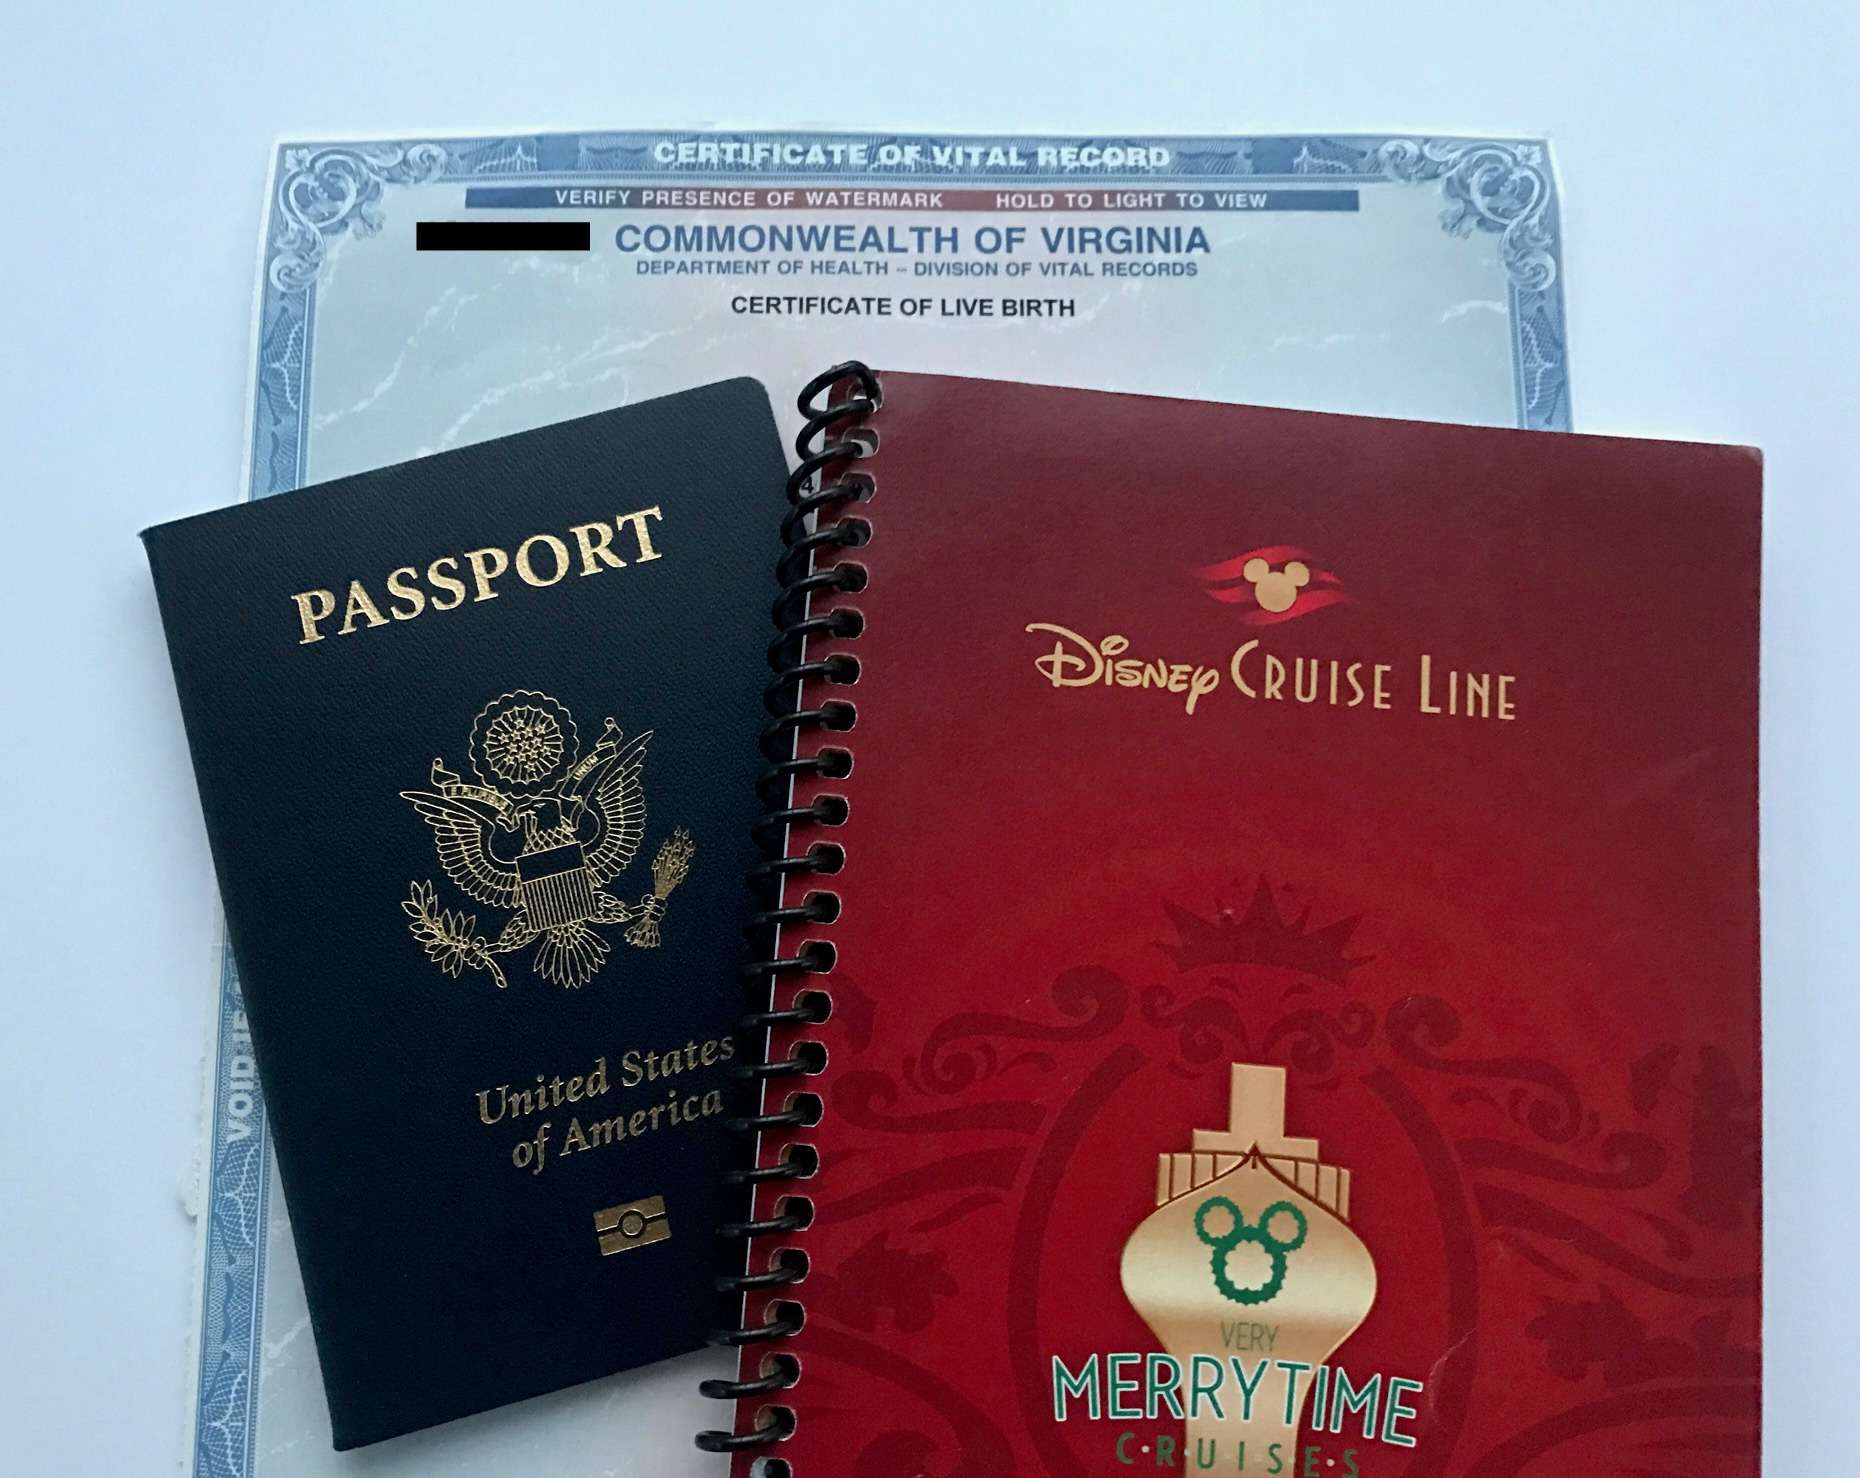 disney cruise bahamas do you need a passport